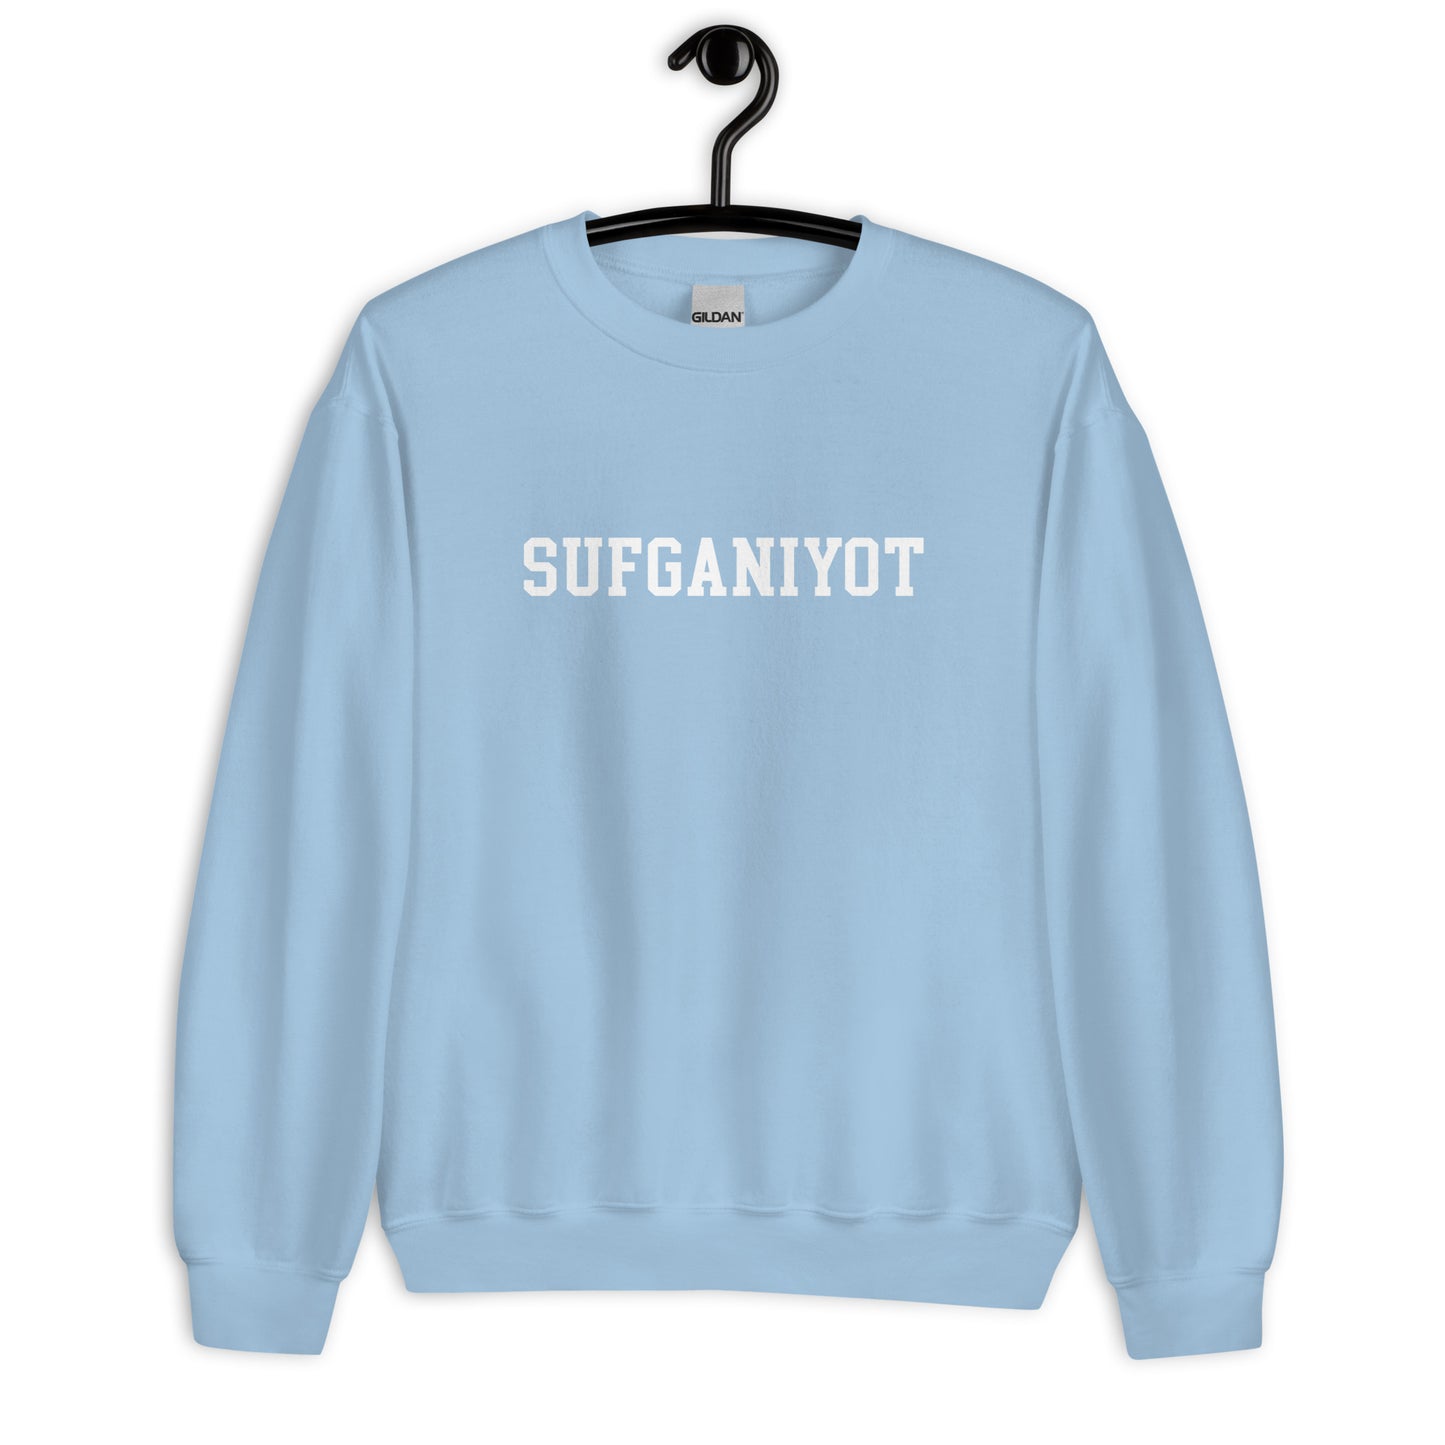 Sufganiyot Sweatshirt - Straight Font